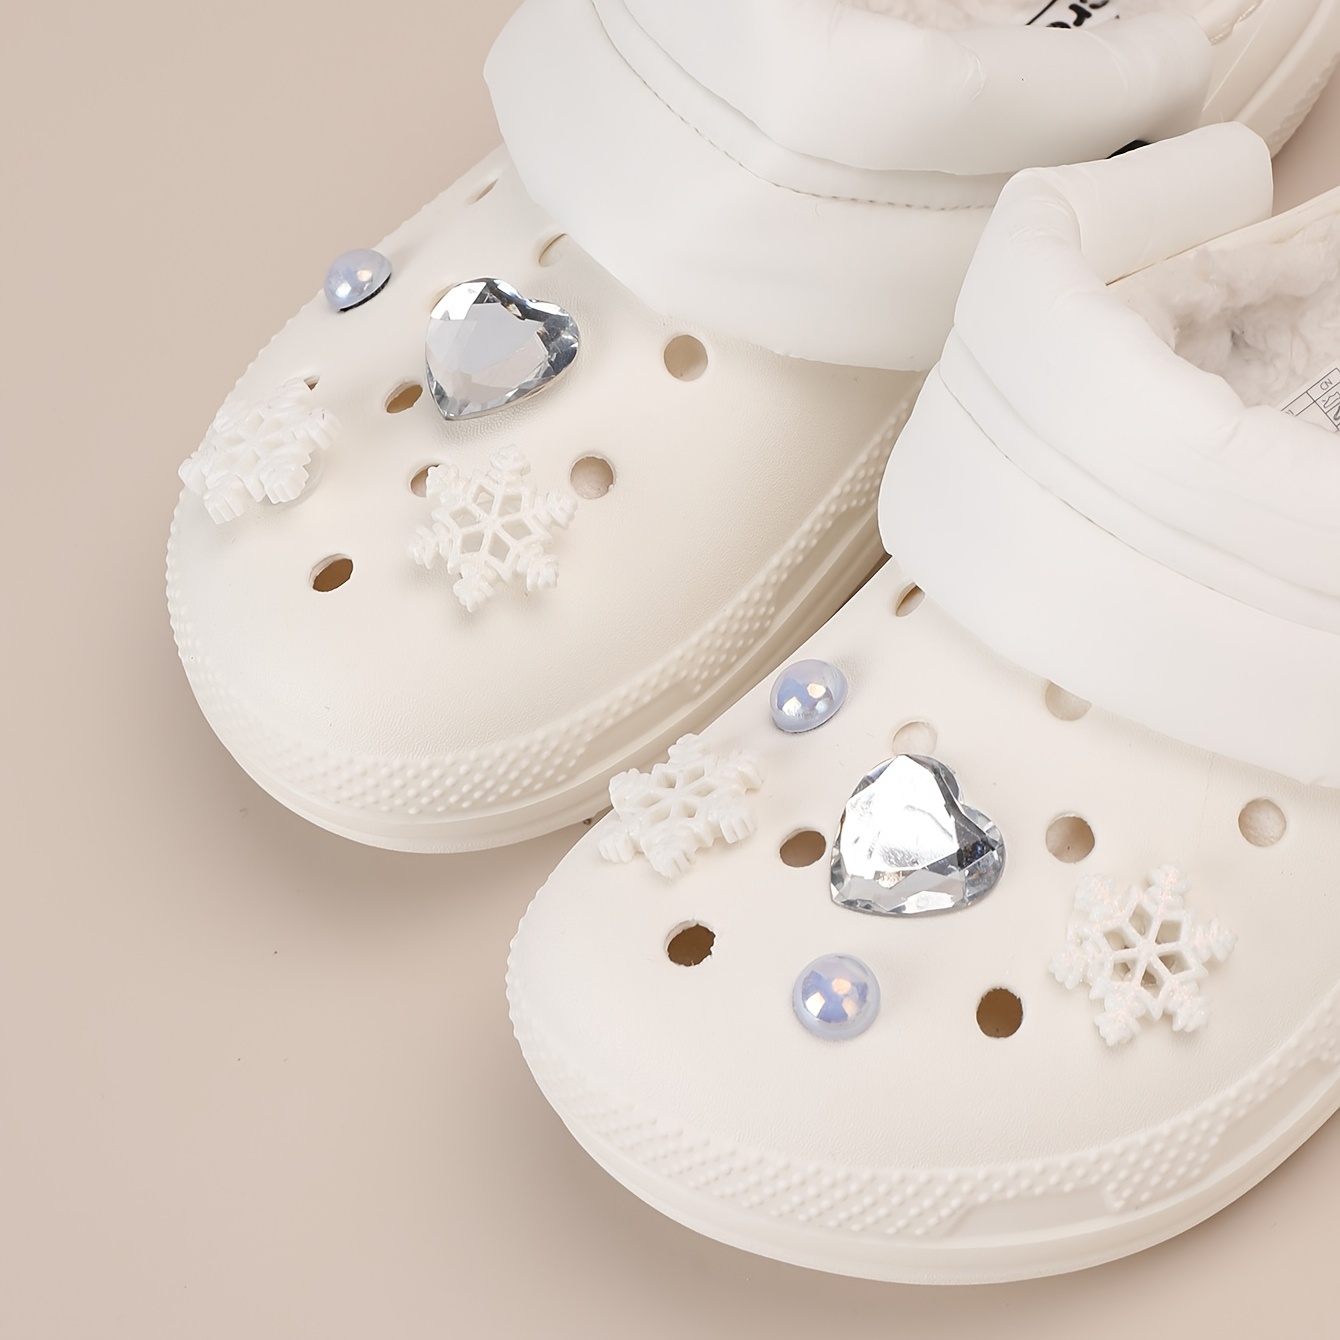 24Pcs Croc Shoe Charms Bling Jewelry - Crystal Jewelry Girls Diamond Croc  Charms Pearl Bead Clog Sandal Slipper - Halloween Croc Charms Christmas